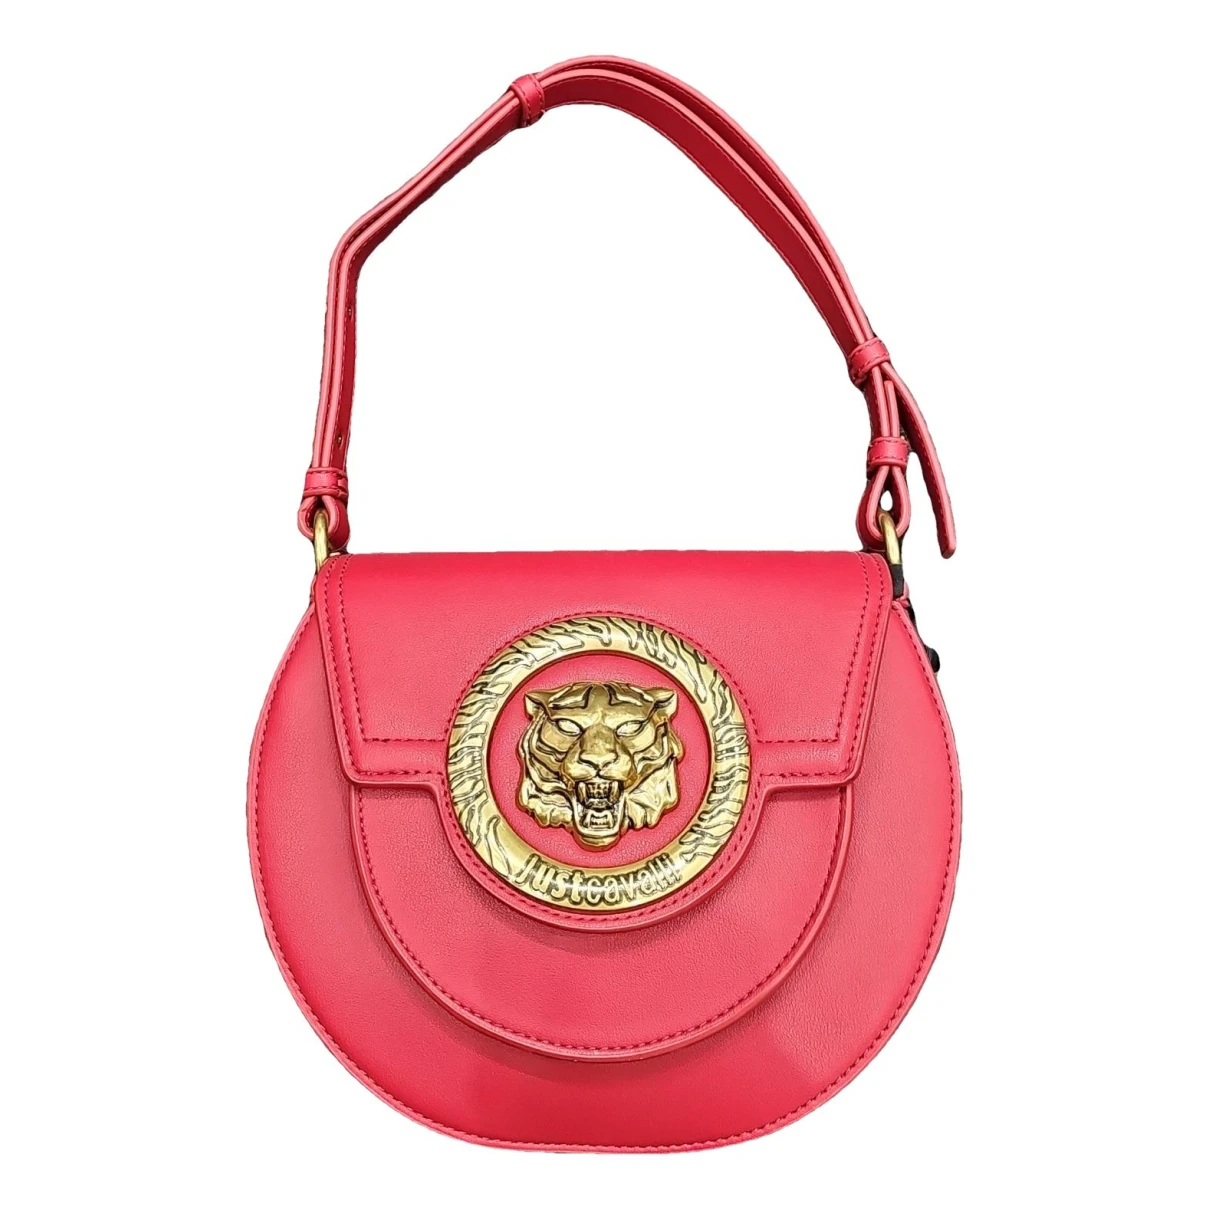 Pre-owned Just Cavalli Vegan Leather Handbag In Red